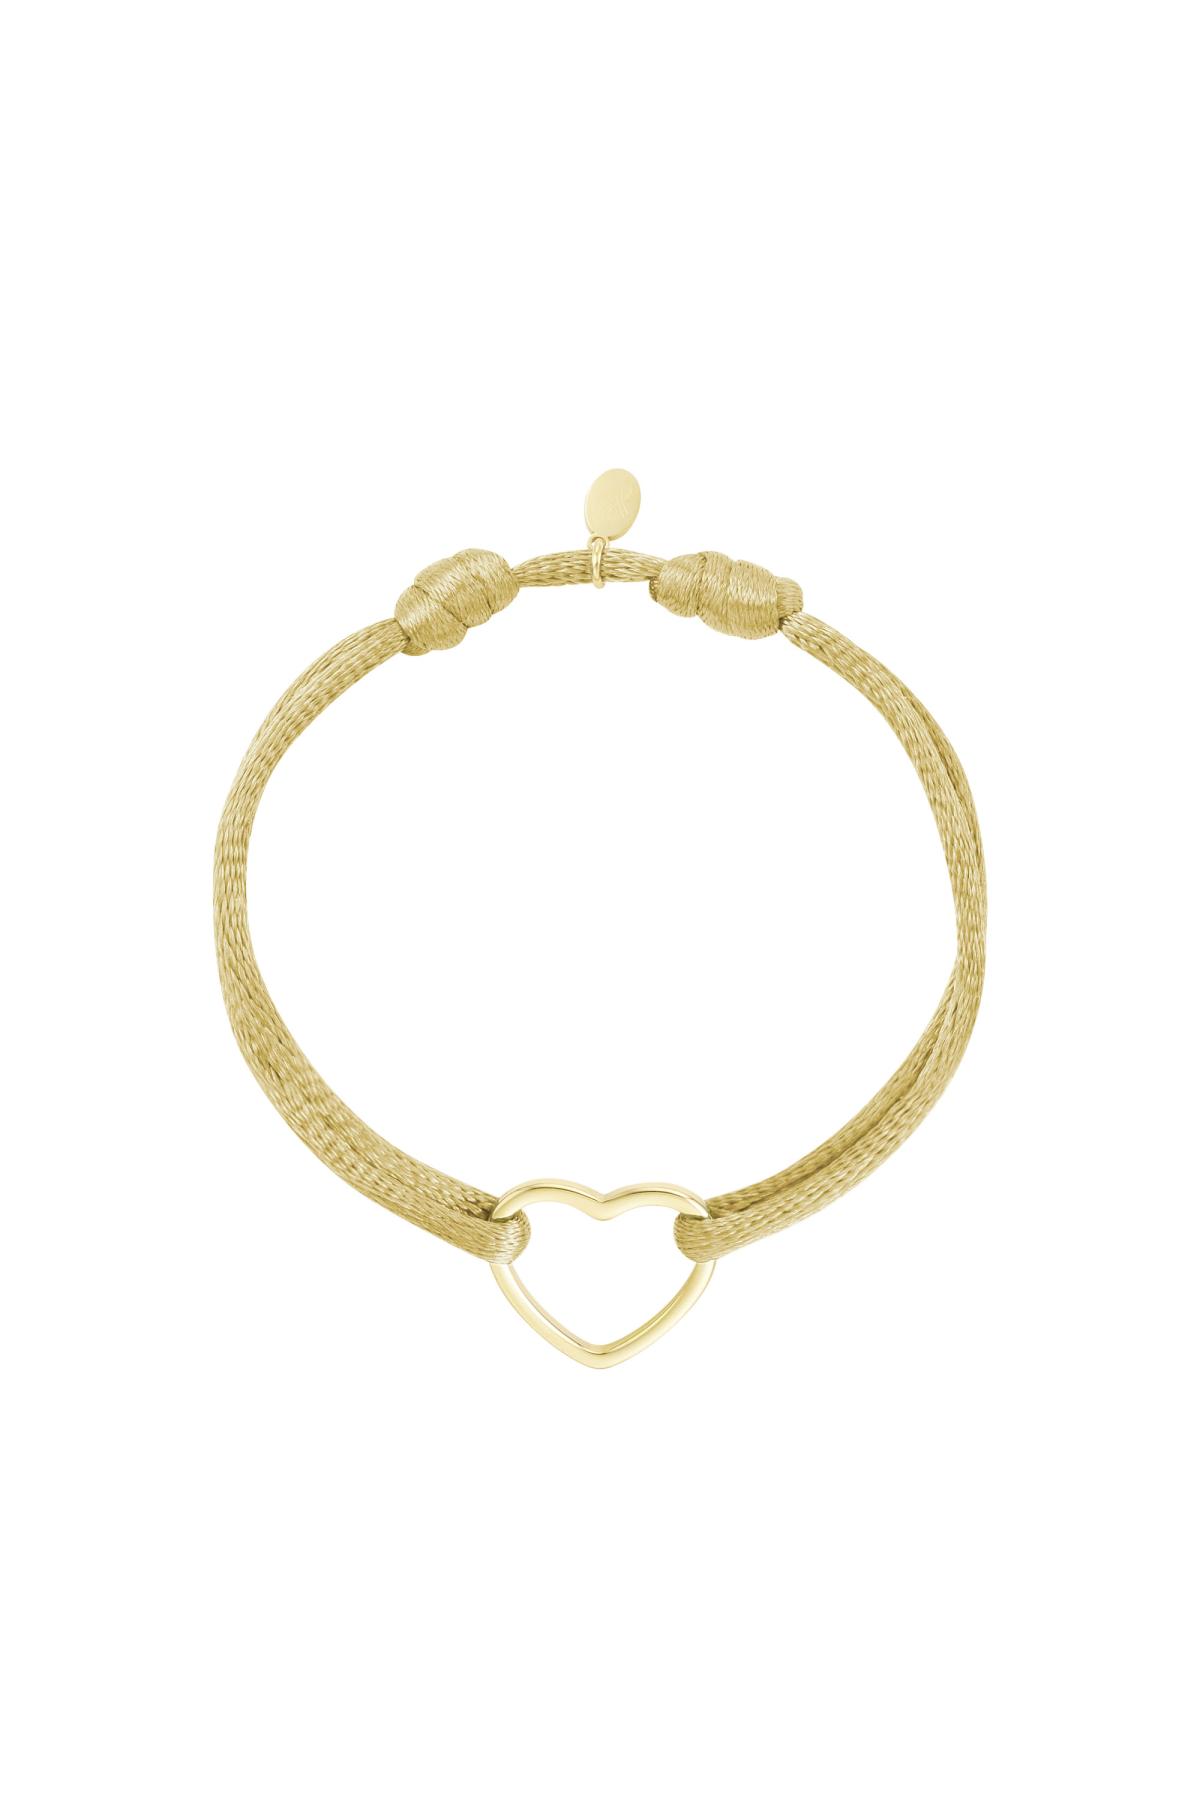 Fabric bracelet heart Beige & Gold Stainless Steel h5 